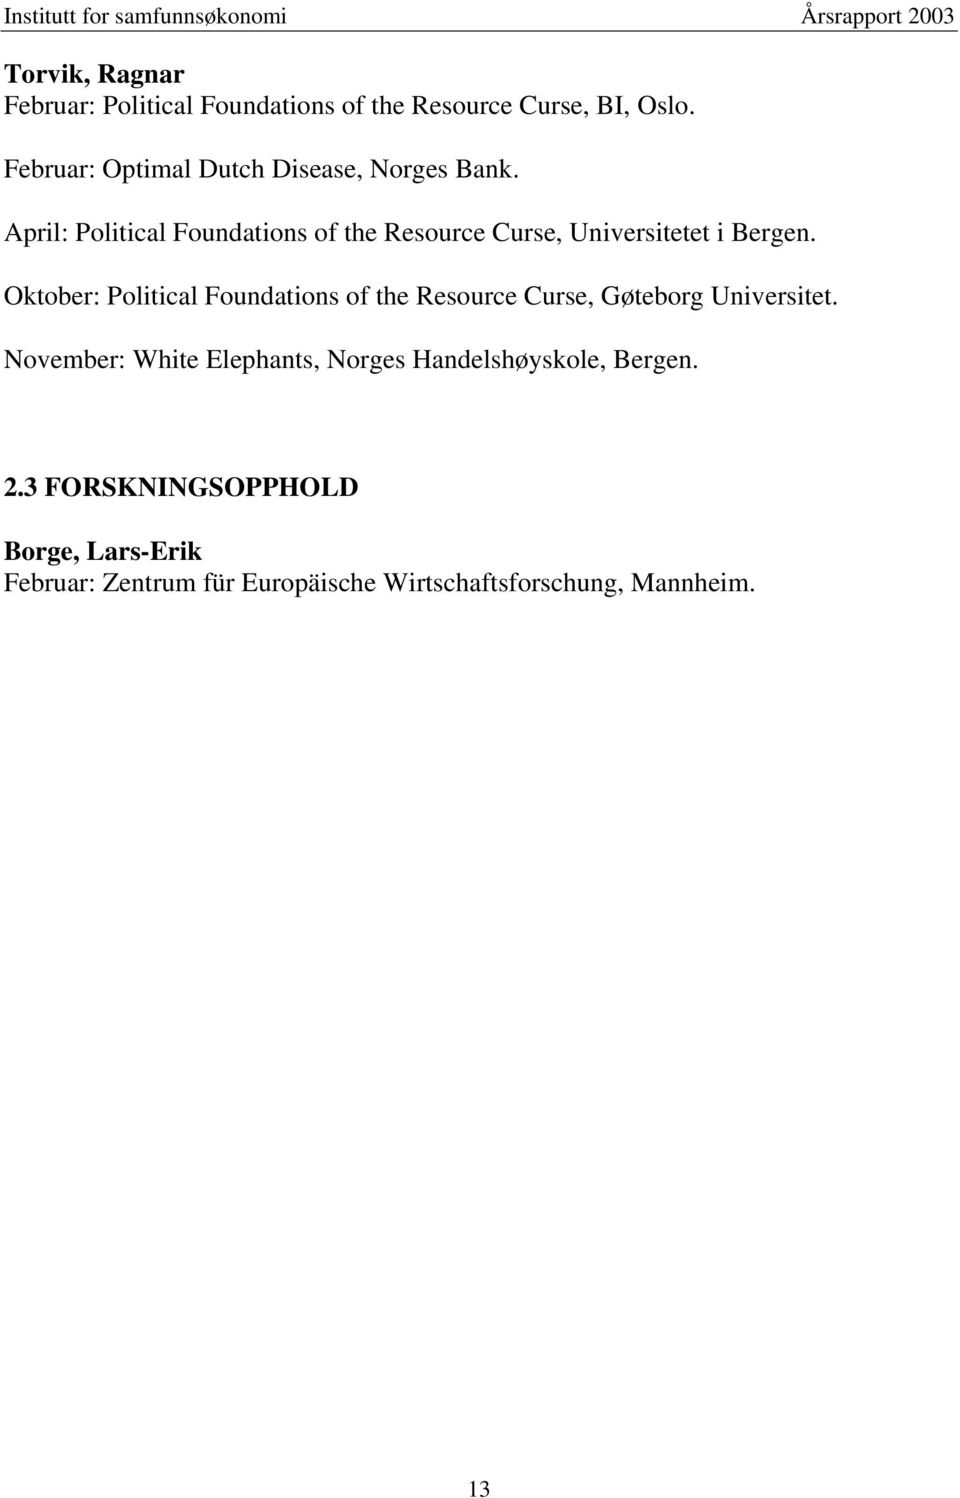 April: Political Foundations of the Resource Curse, Universitetet i Bergen.